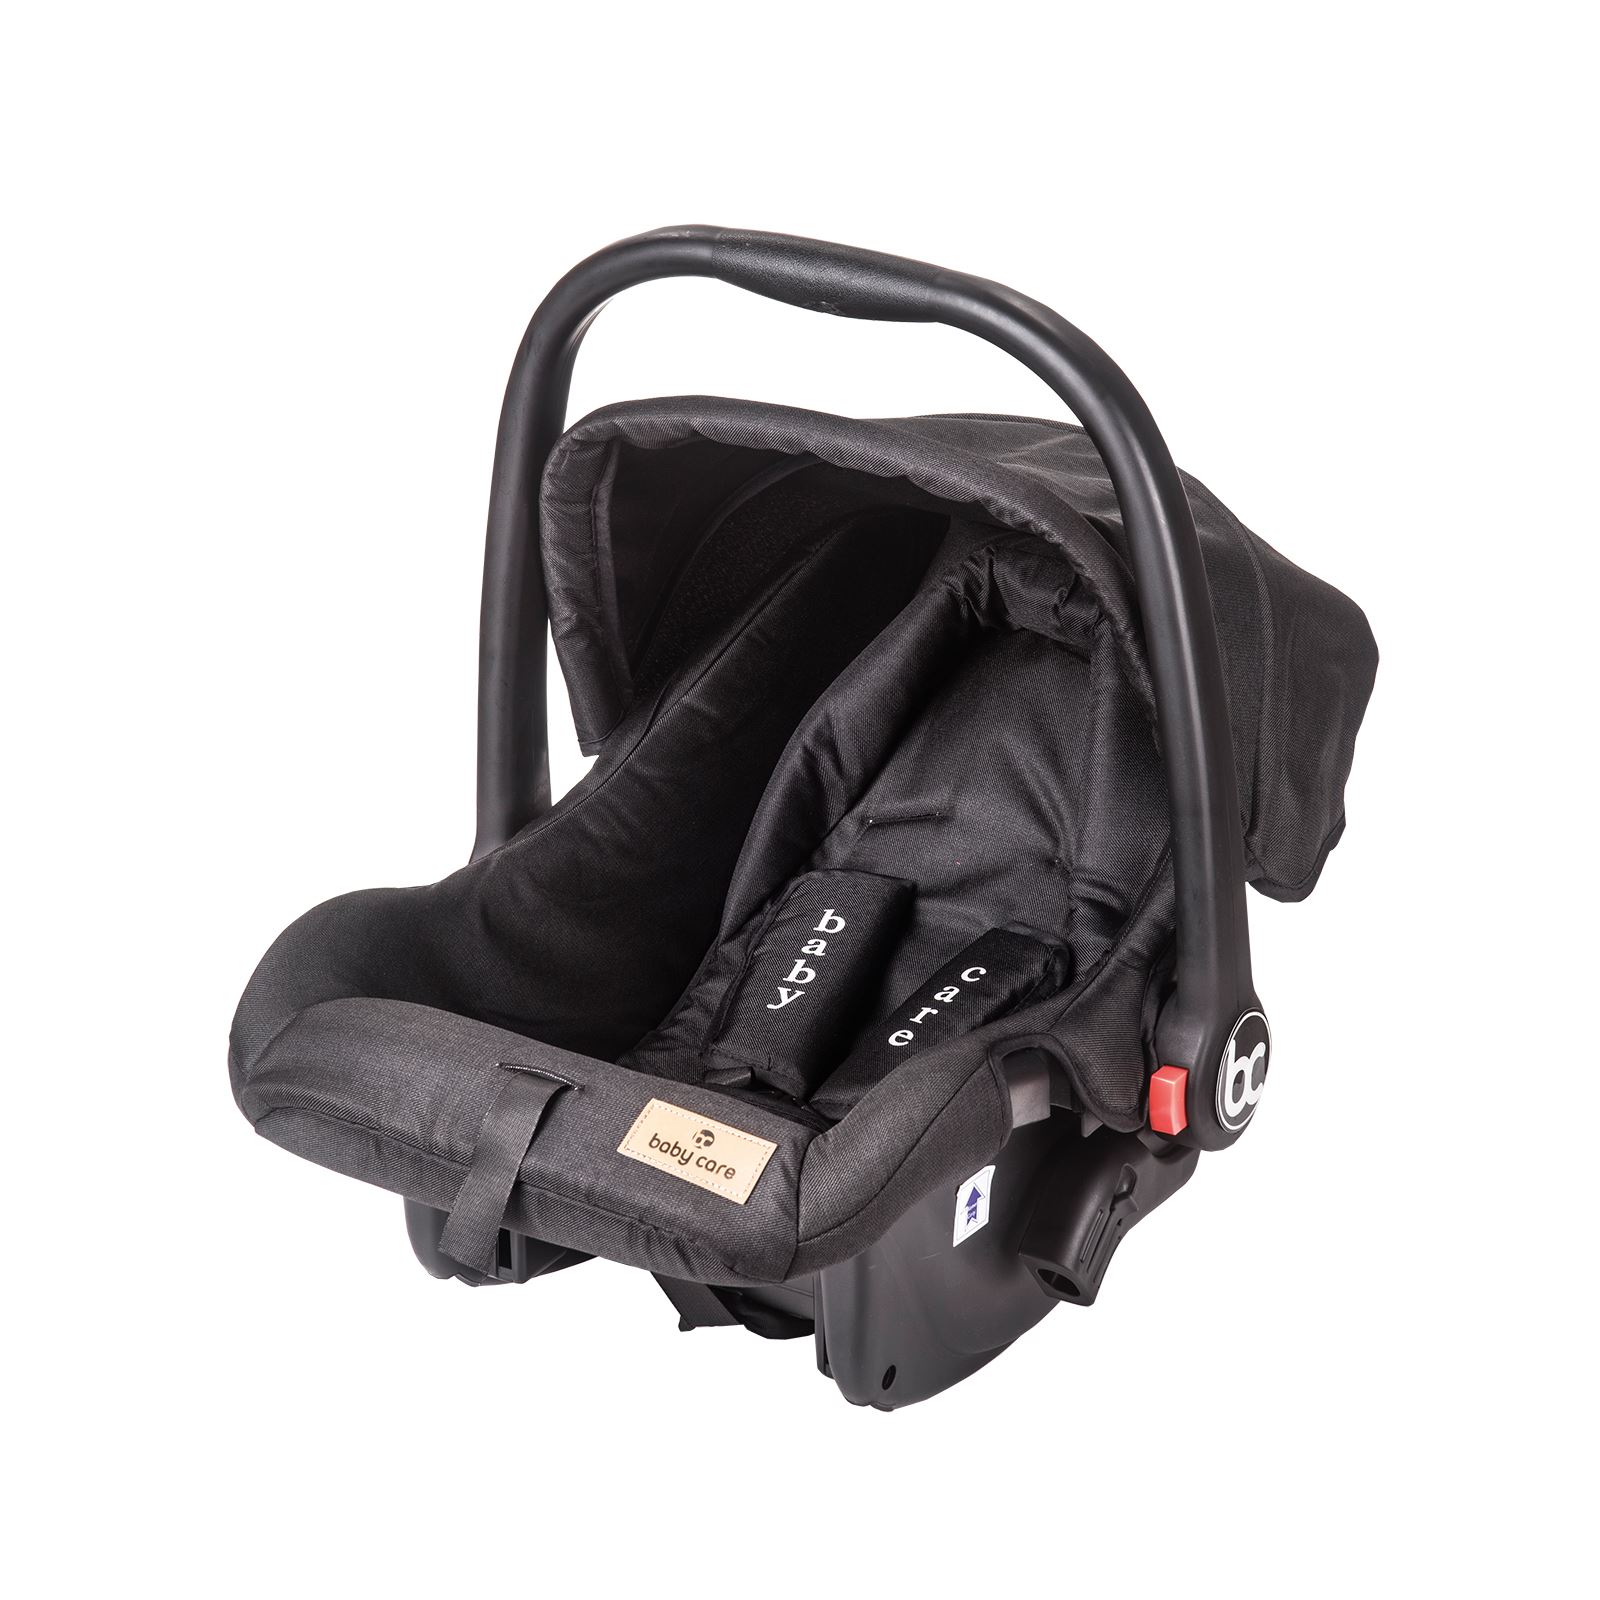 Babycare Bagaj Travel Sistem Kabin Bebek Arabası Siyah